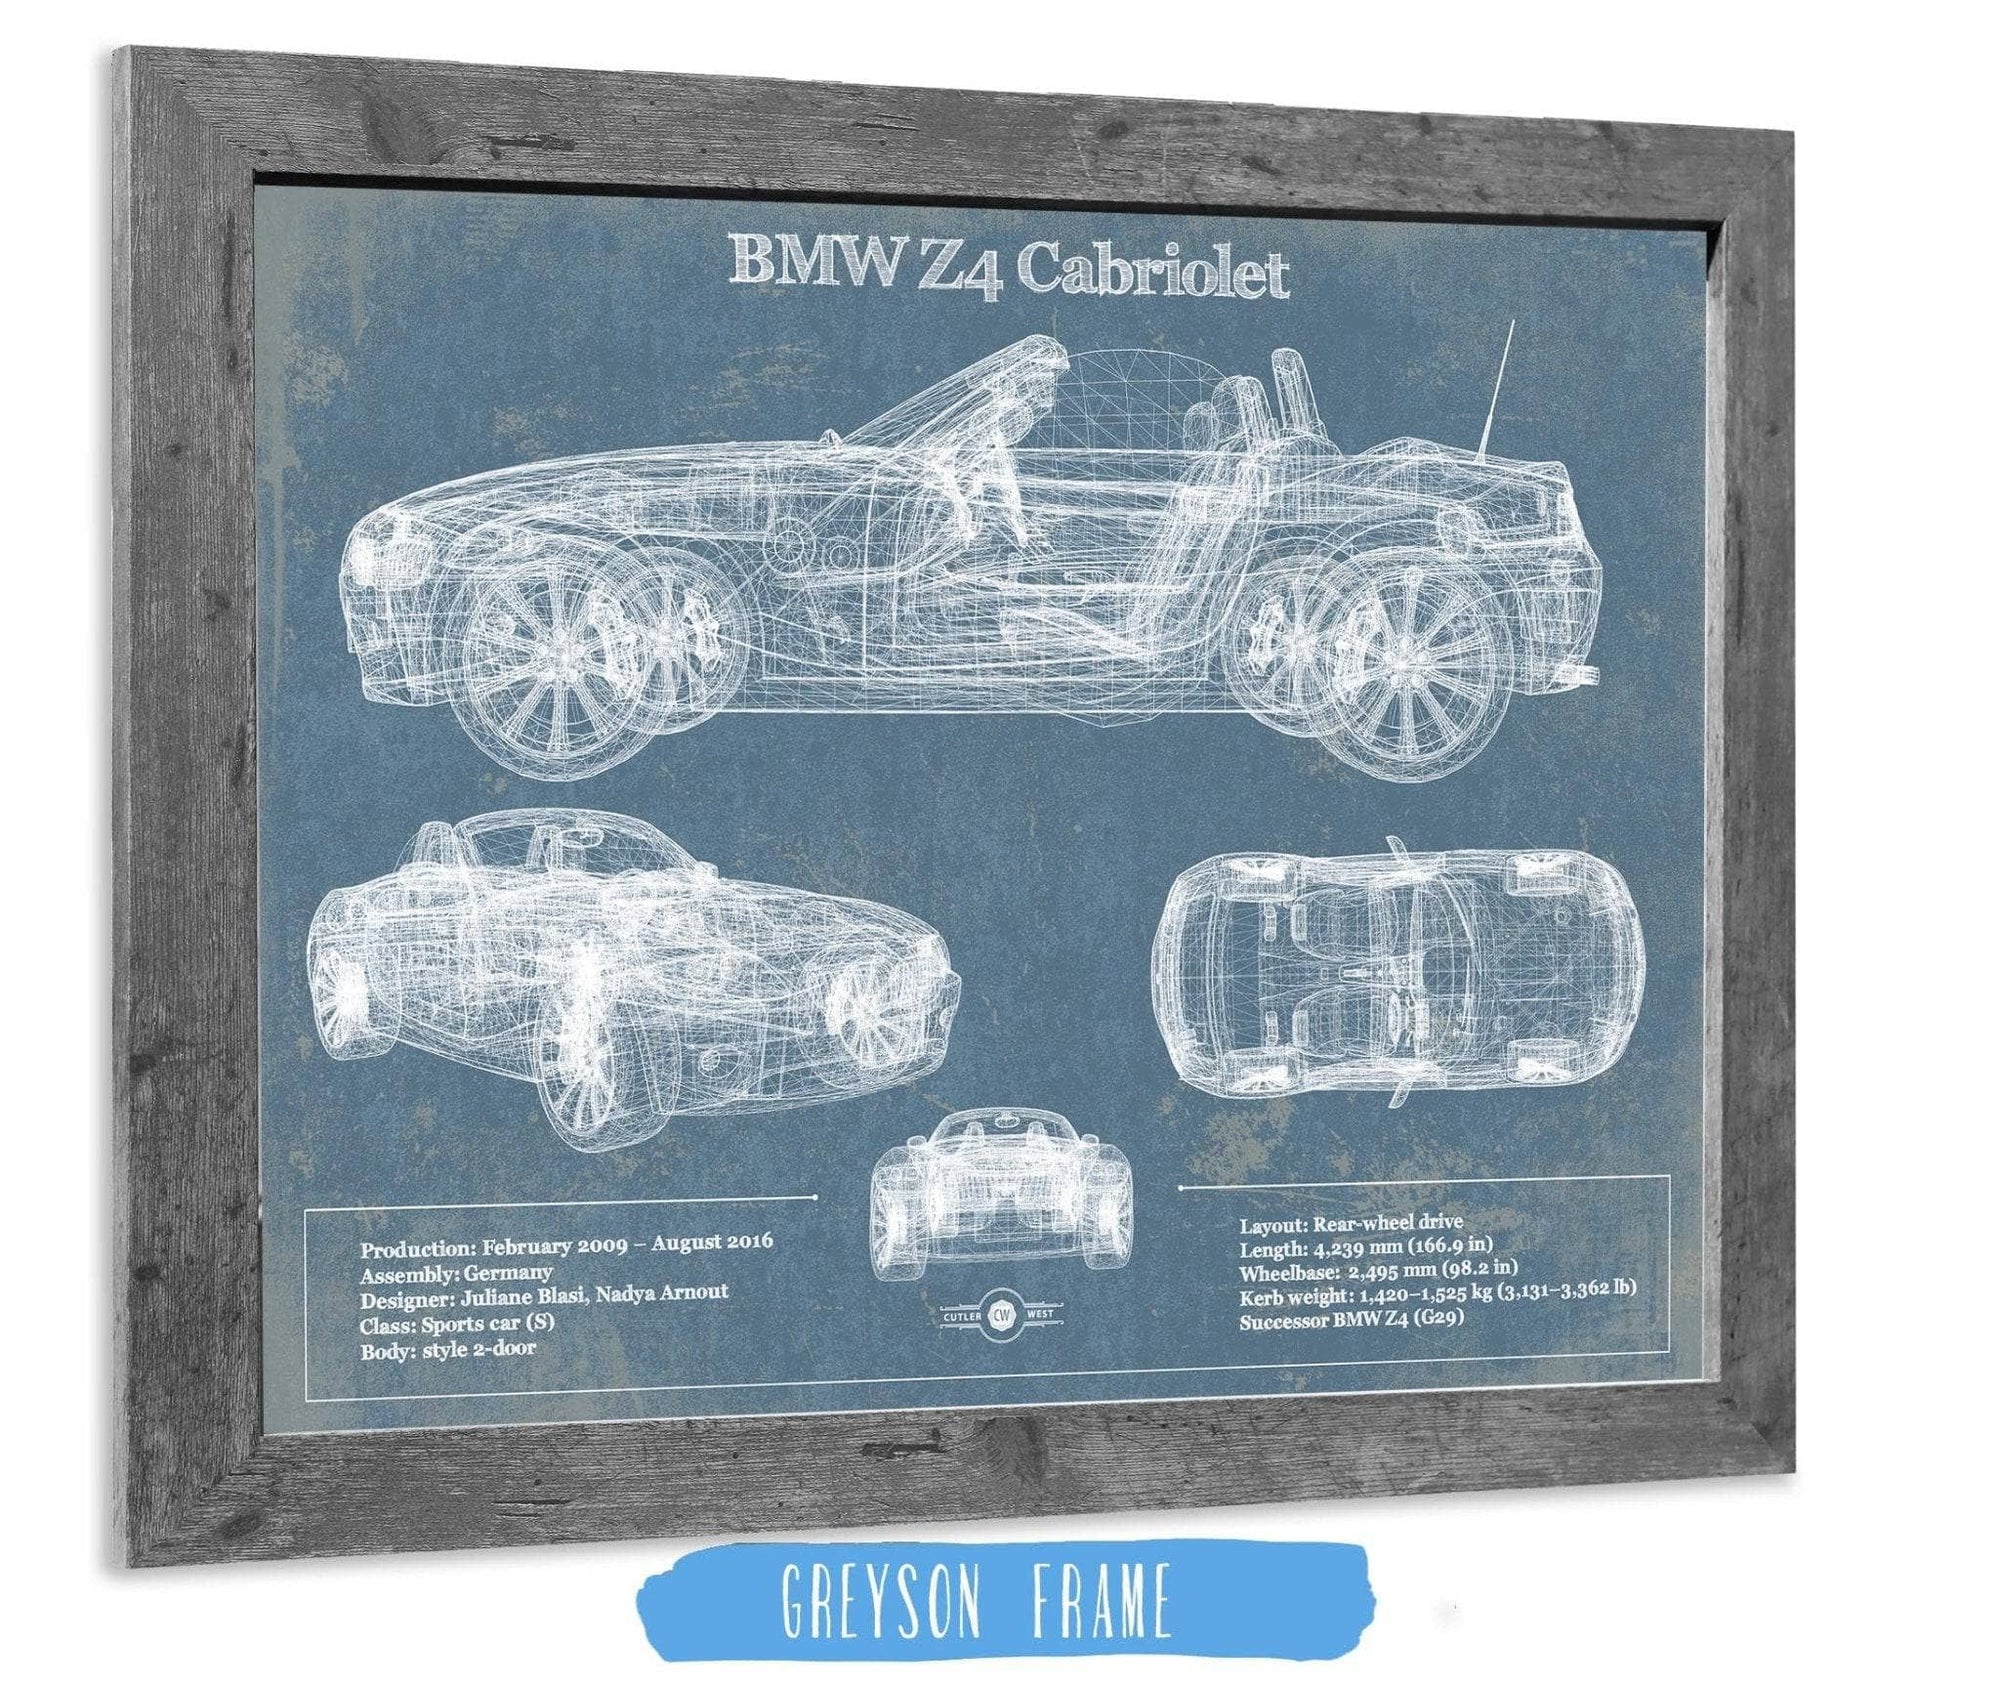 Cutler West Vehicle Collection 14" x 11" / Greyson Frame BMW Z4 Cabriolet Vintage Blueprint Auto Print 833110072_48942